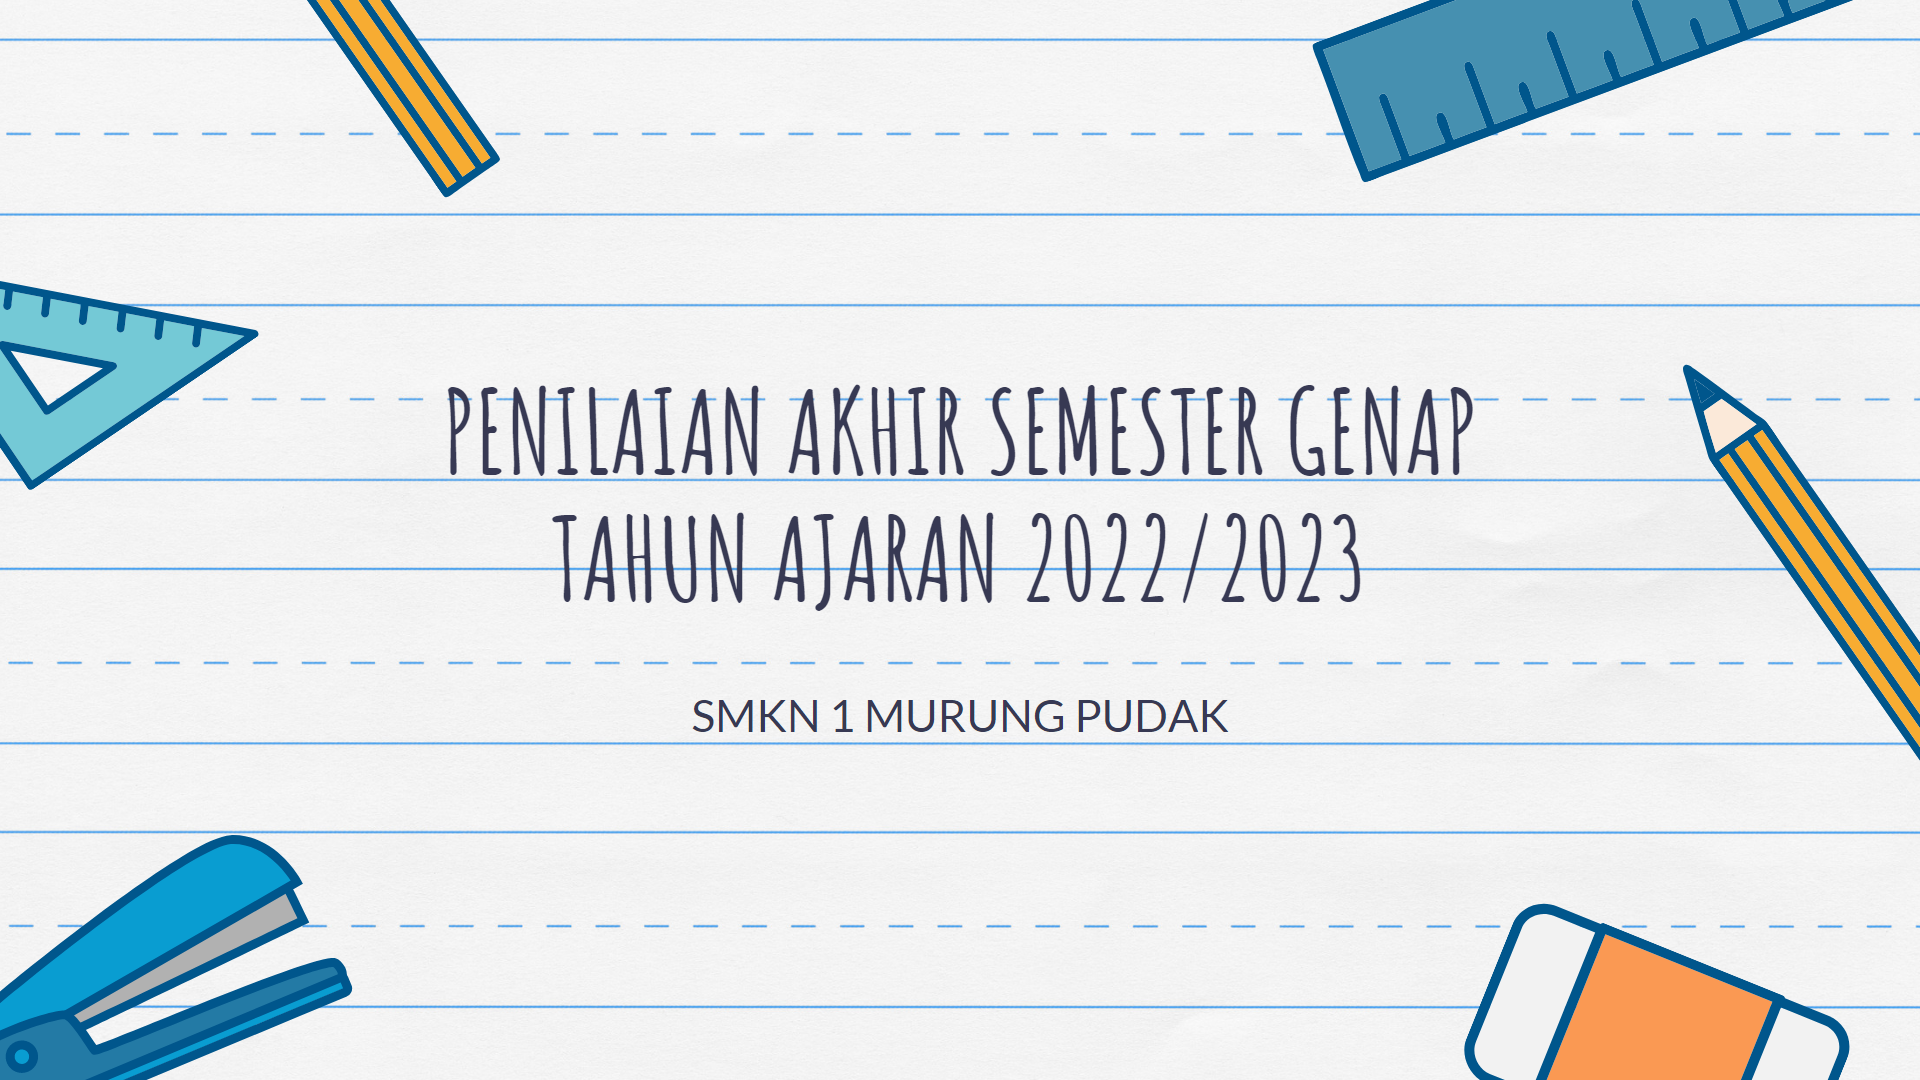 You are currently viewing Penilaian Akhir Semester Genap Tahun Ajaran 2022/2023